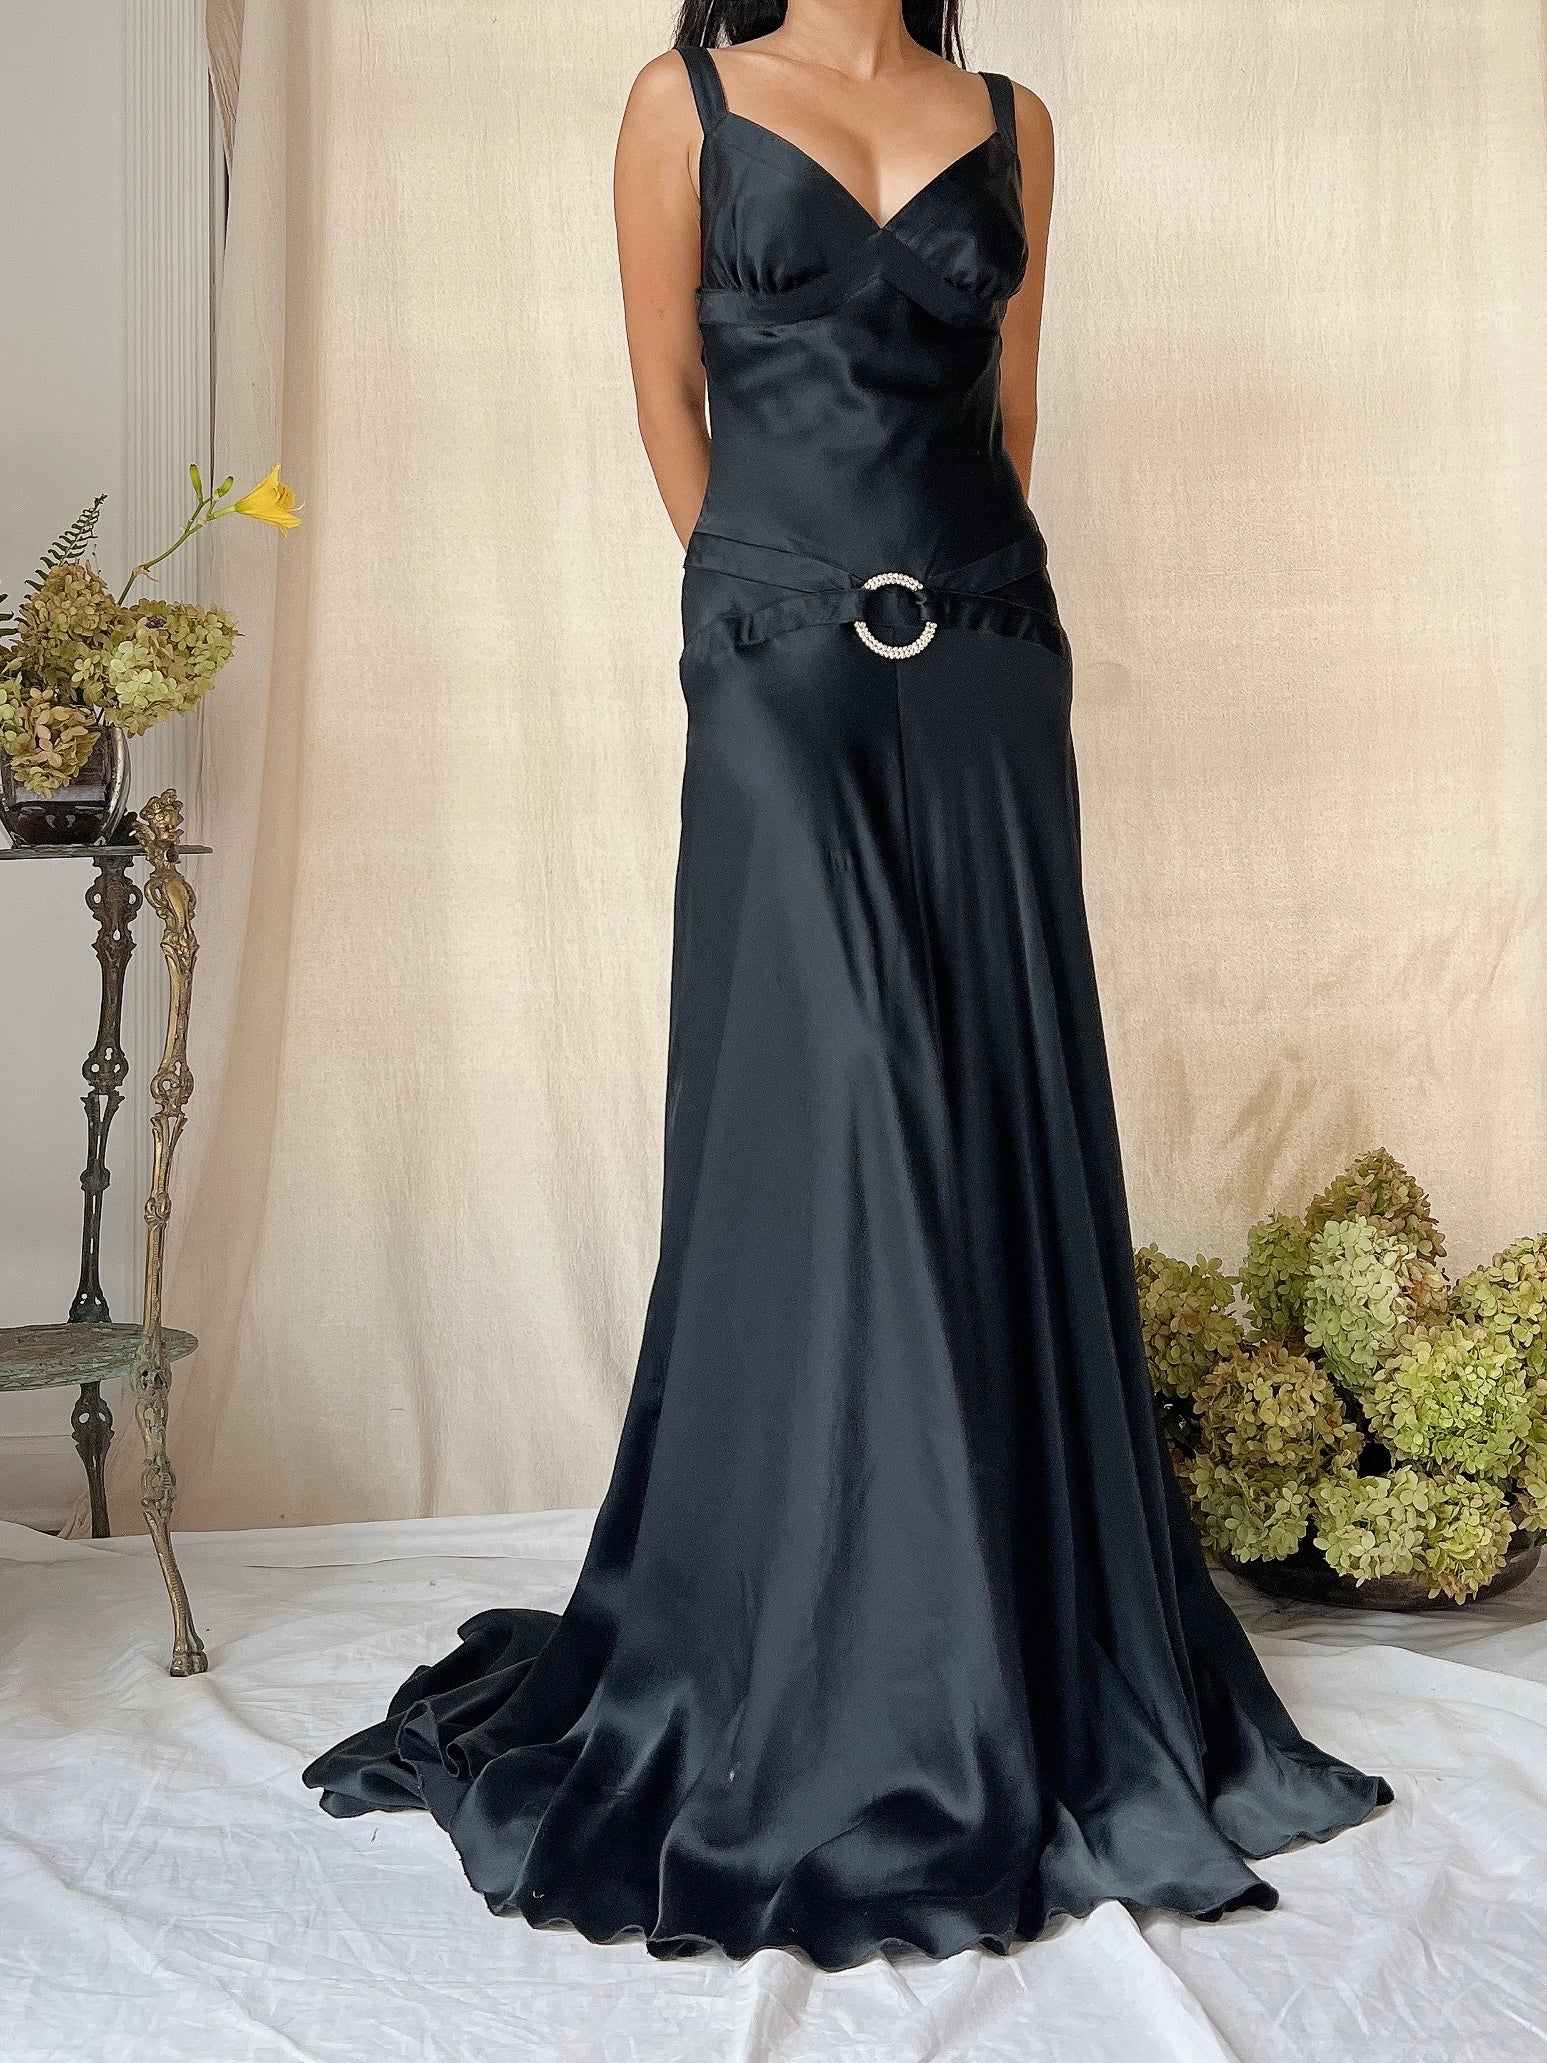 Vintage Black Silk Bias Cut Gown - S/M